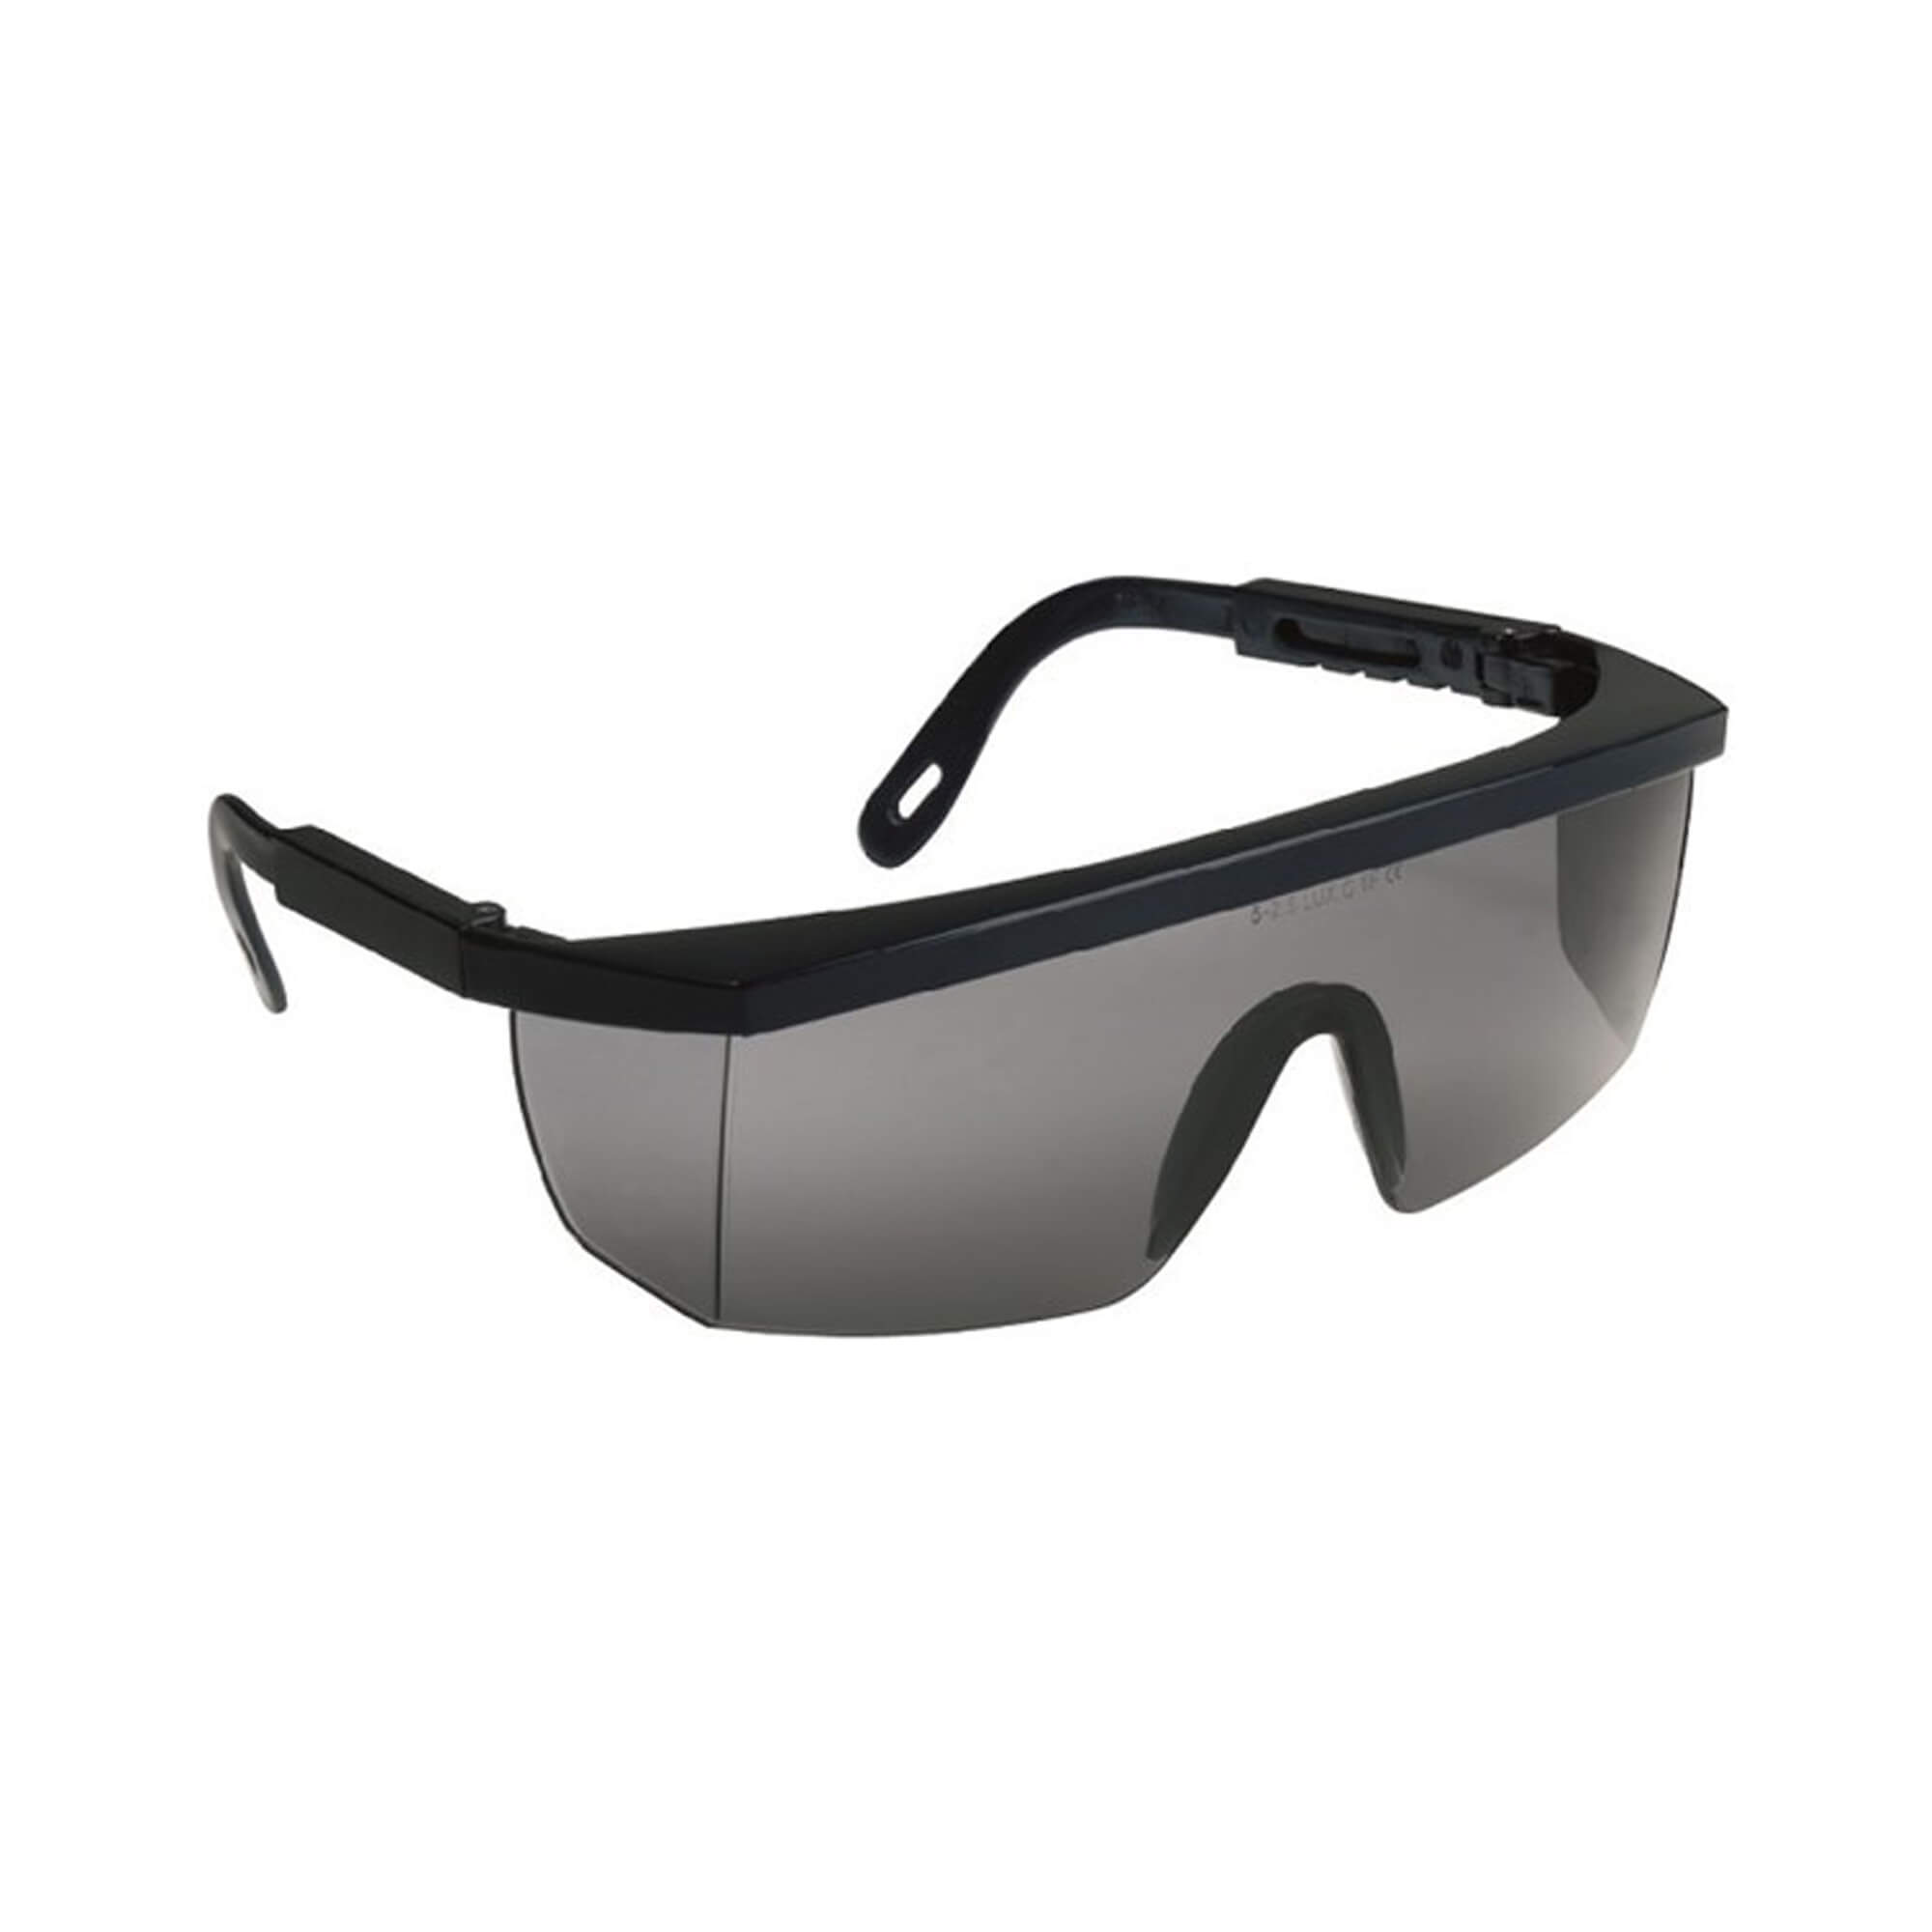 Ecolux safety glasses, dark lens